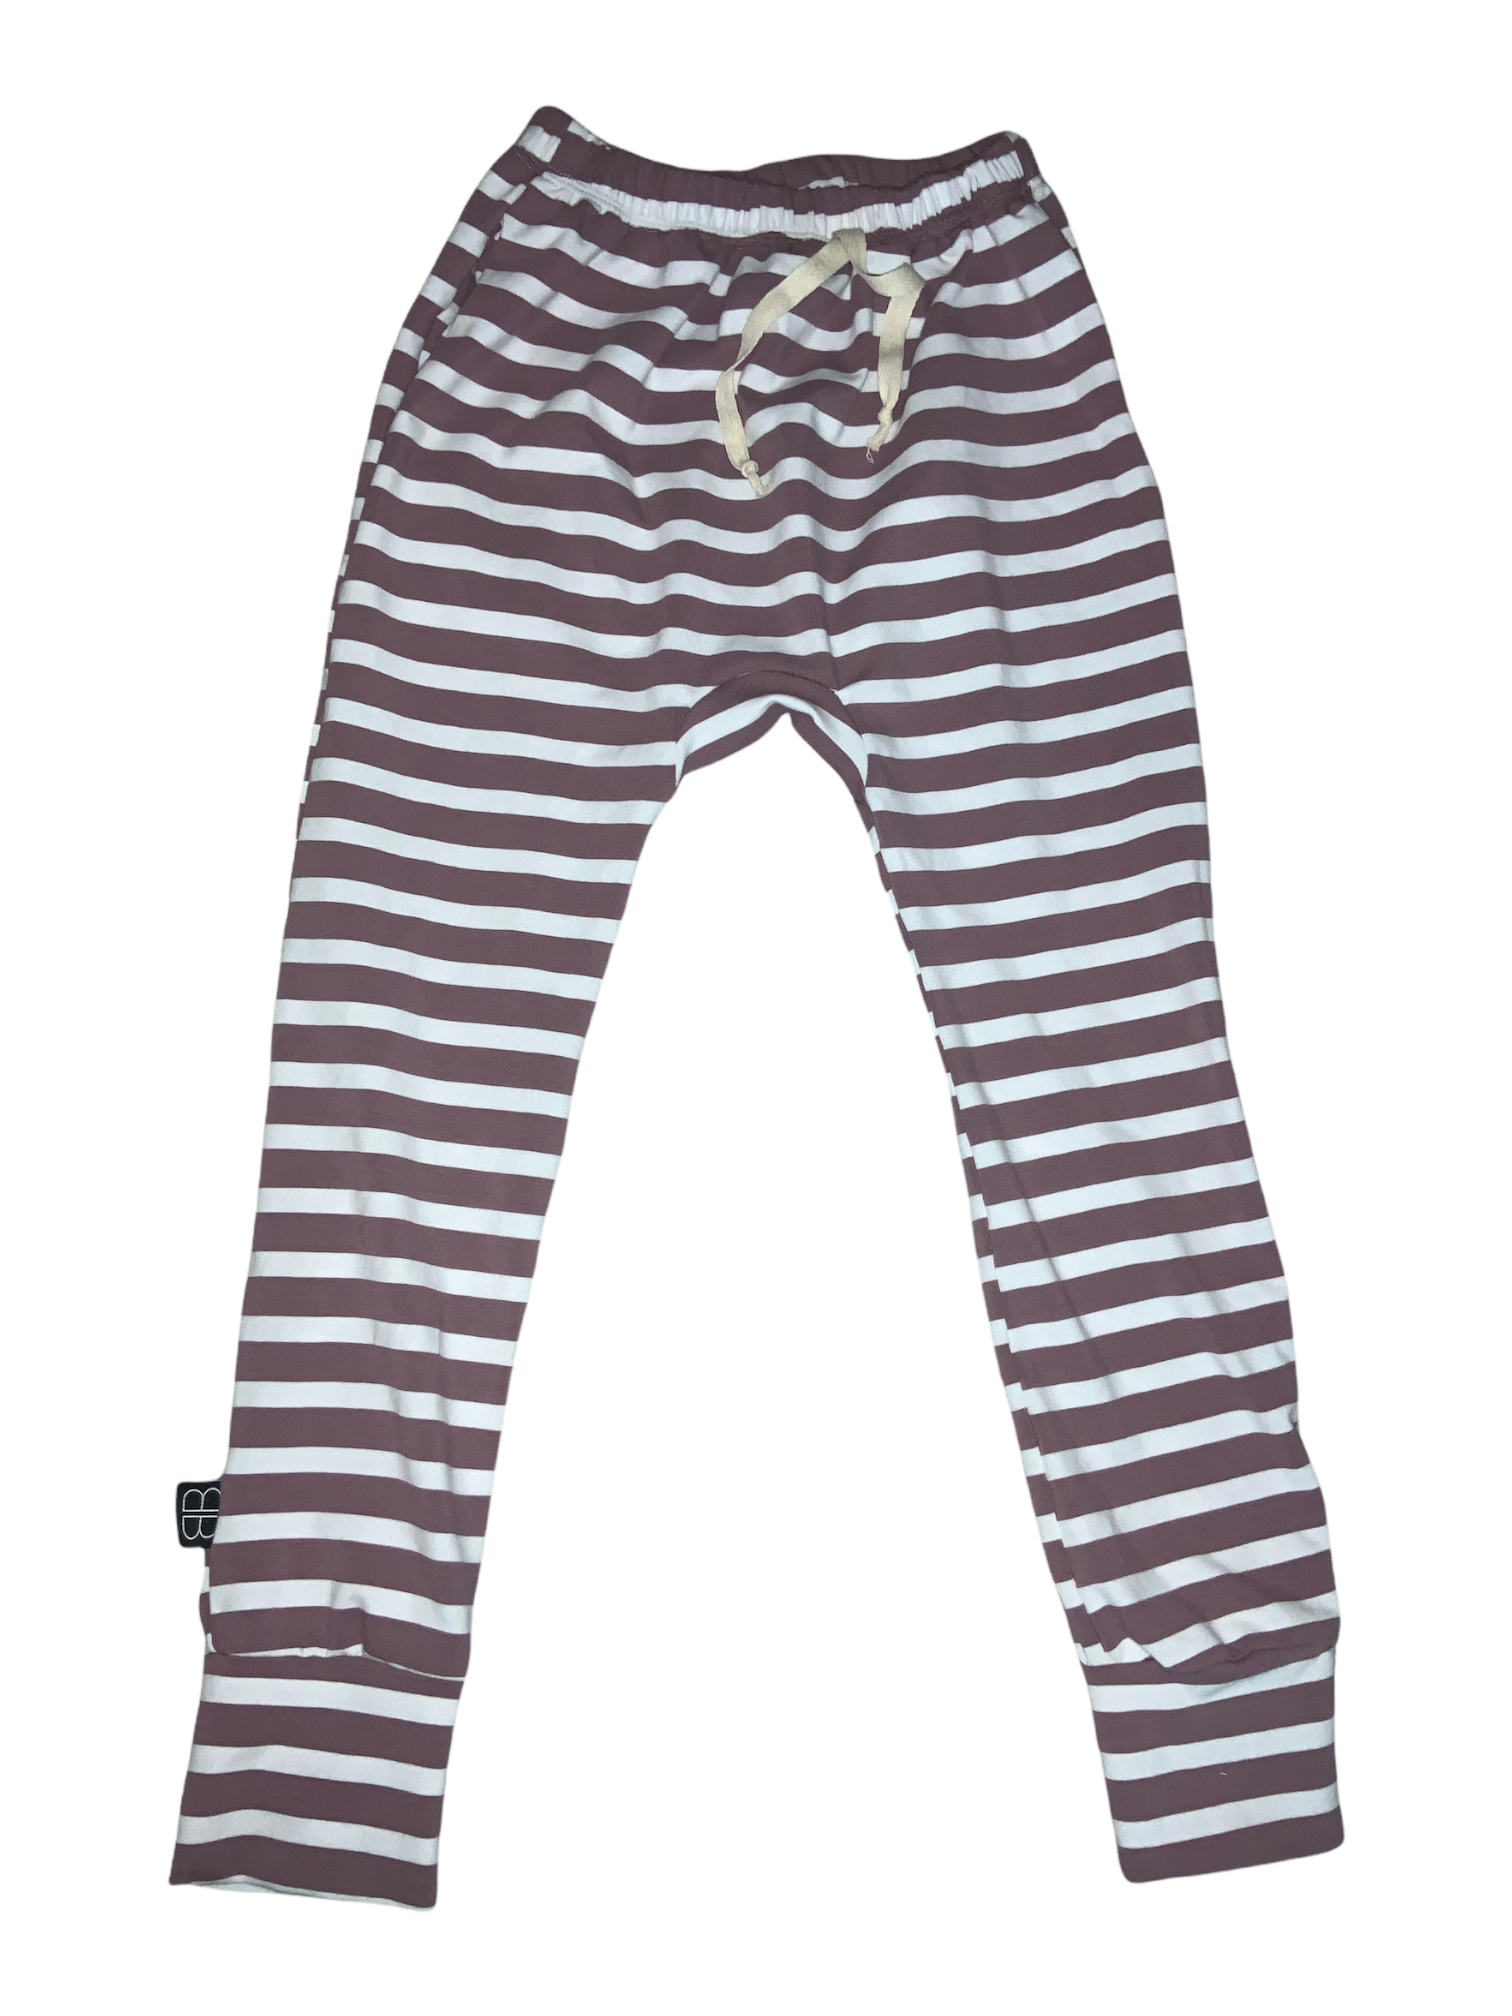 RTS mauve Stripes Pocket Sweet Pants - Baby Bums Clothing 